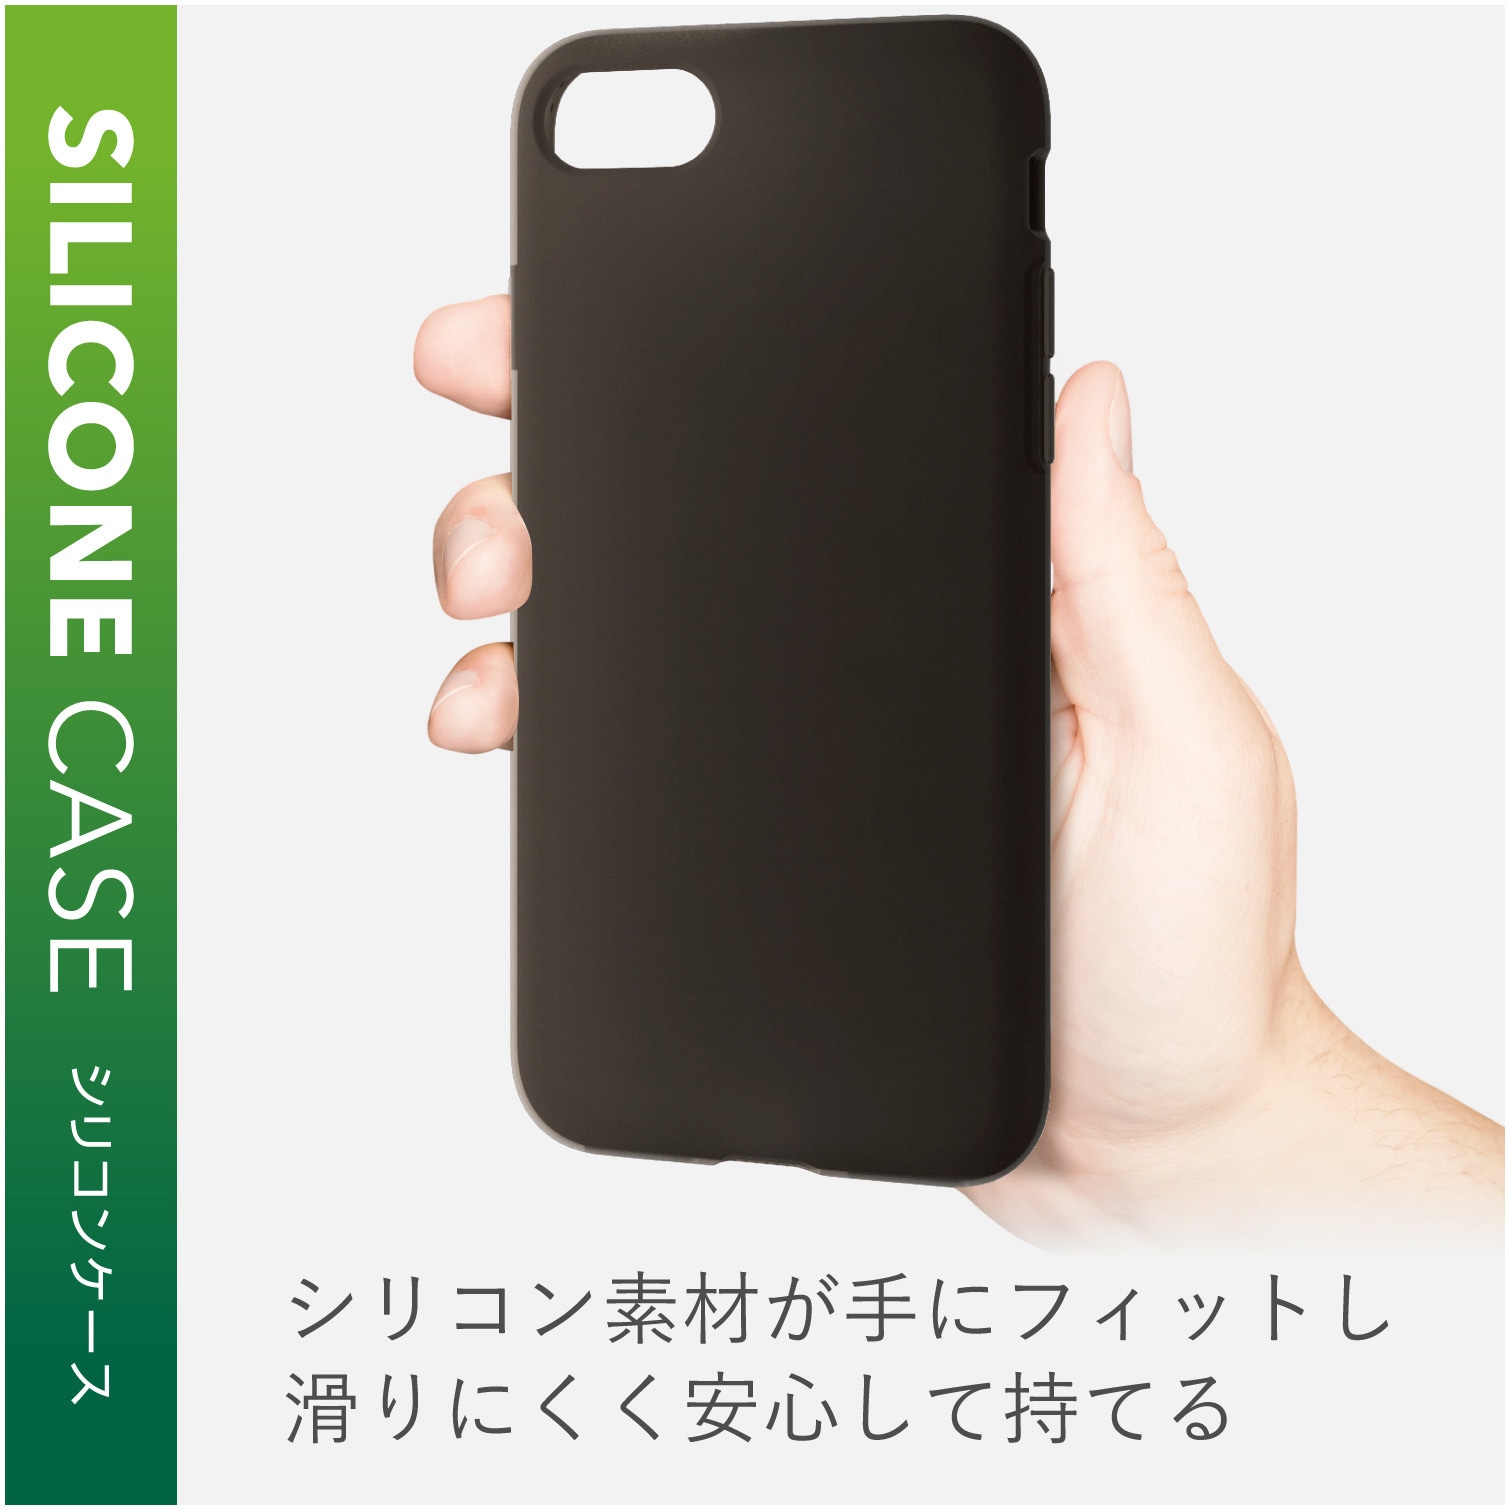 Pm A19ascbk Iphonese 第2世代 Iphone8 Iphone7 ケース カバー シリコンケース 柔らかい 1個 エレコム 通販サイトmonotaro